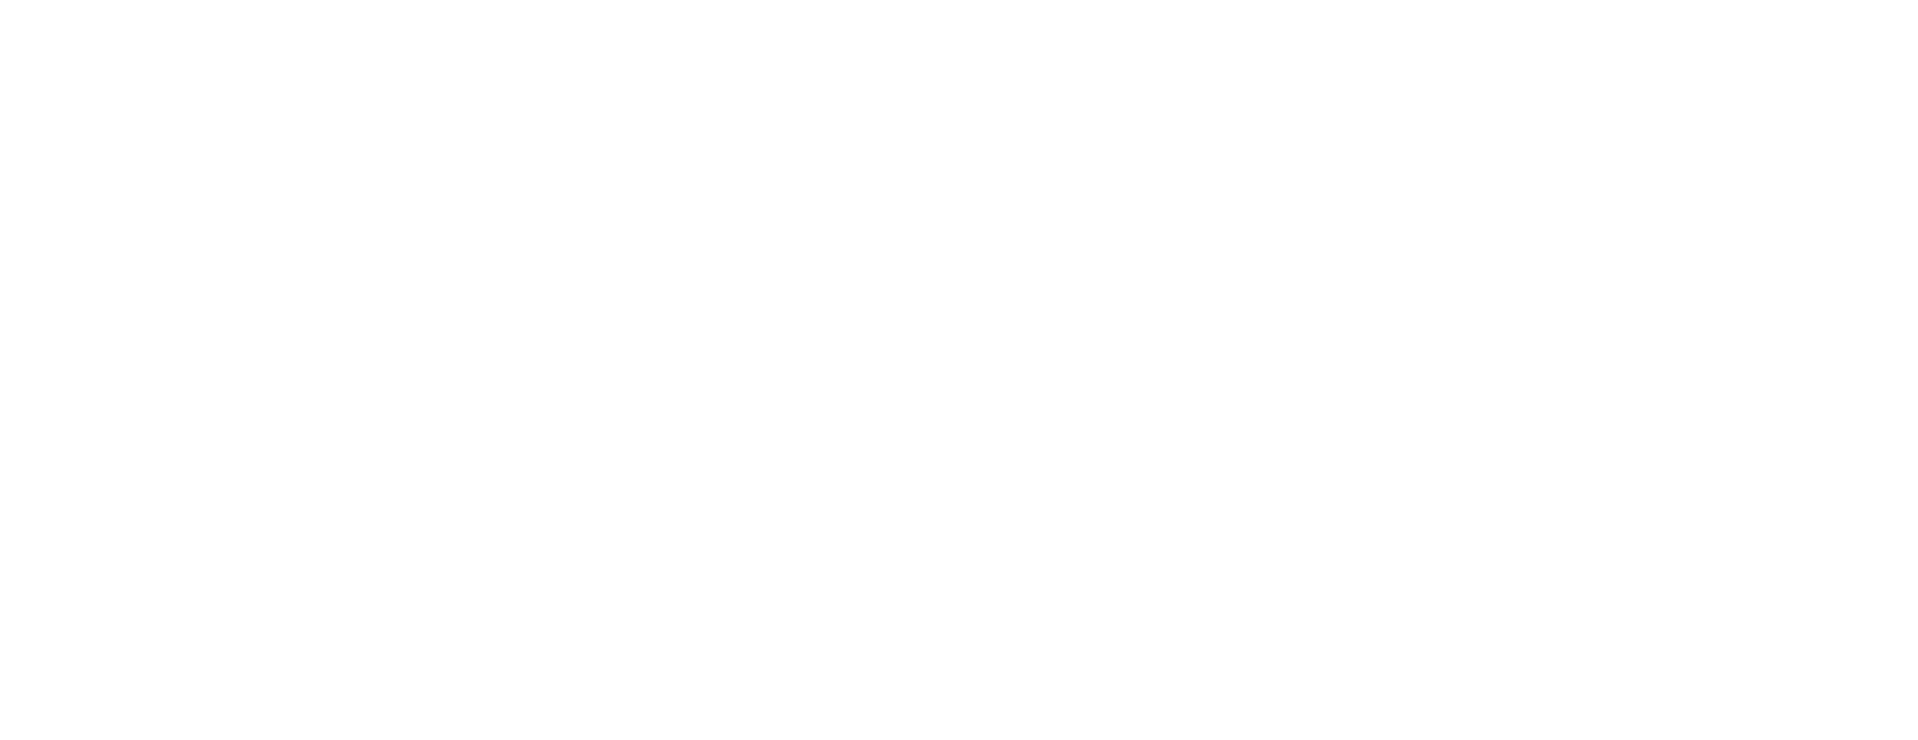 Wren Boys logo